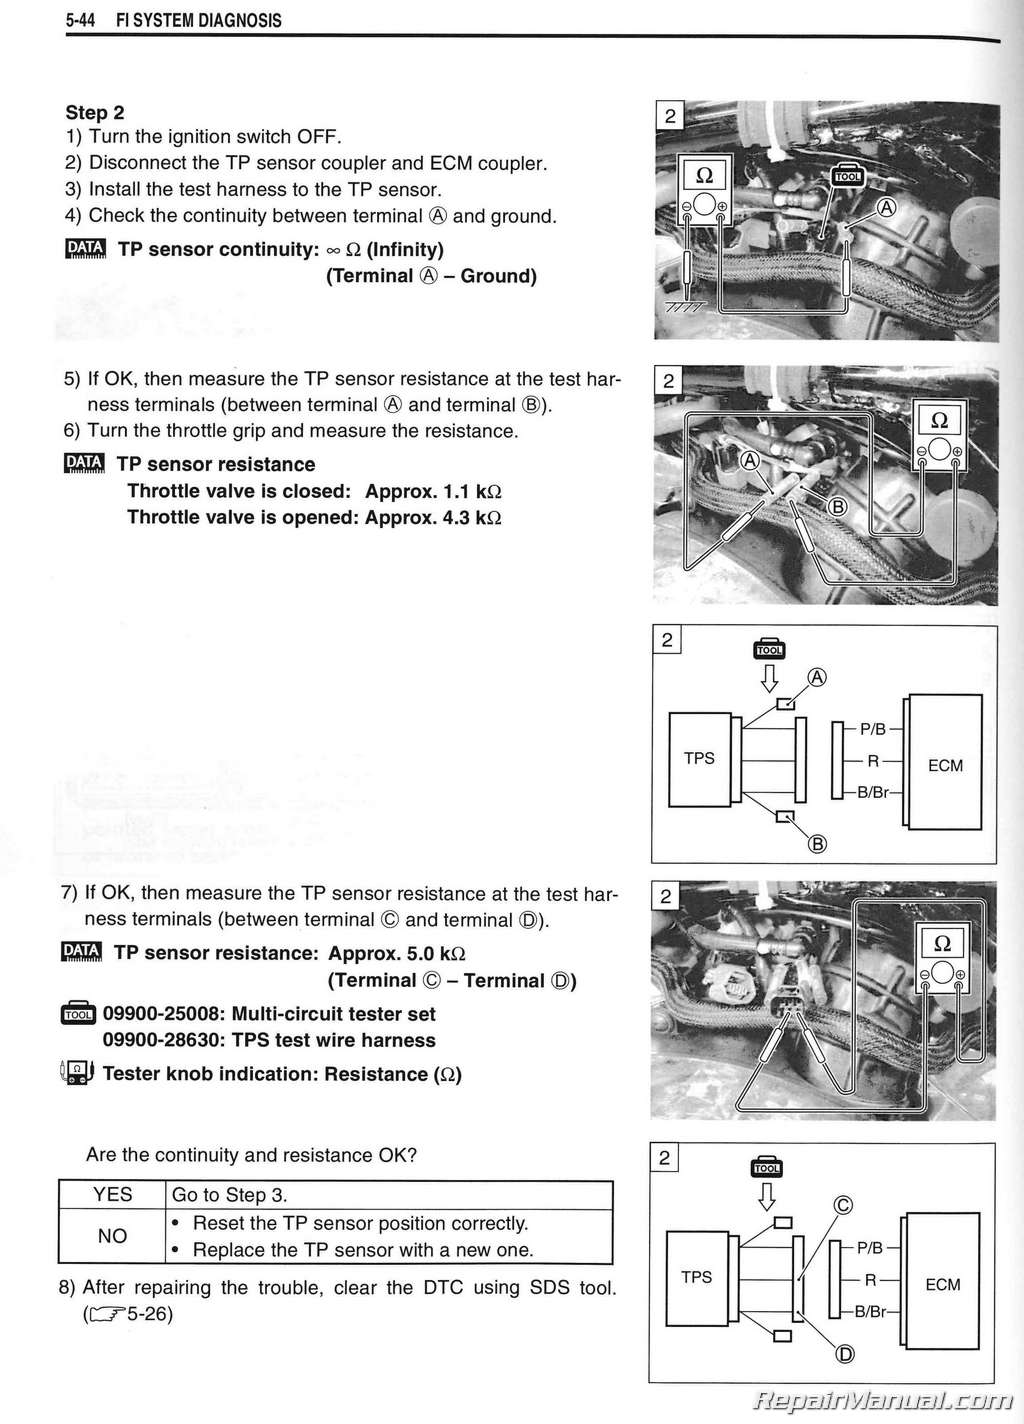 2007 suzuki boulevard m109r owners manual pdf